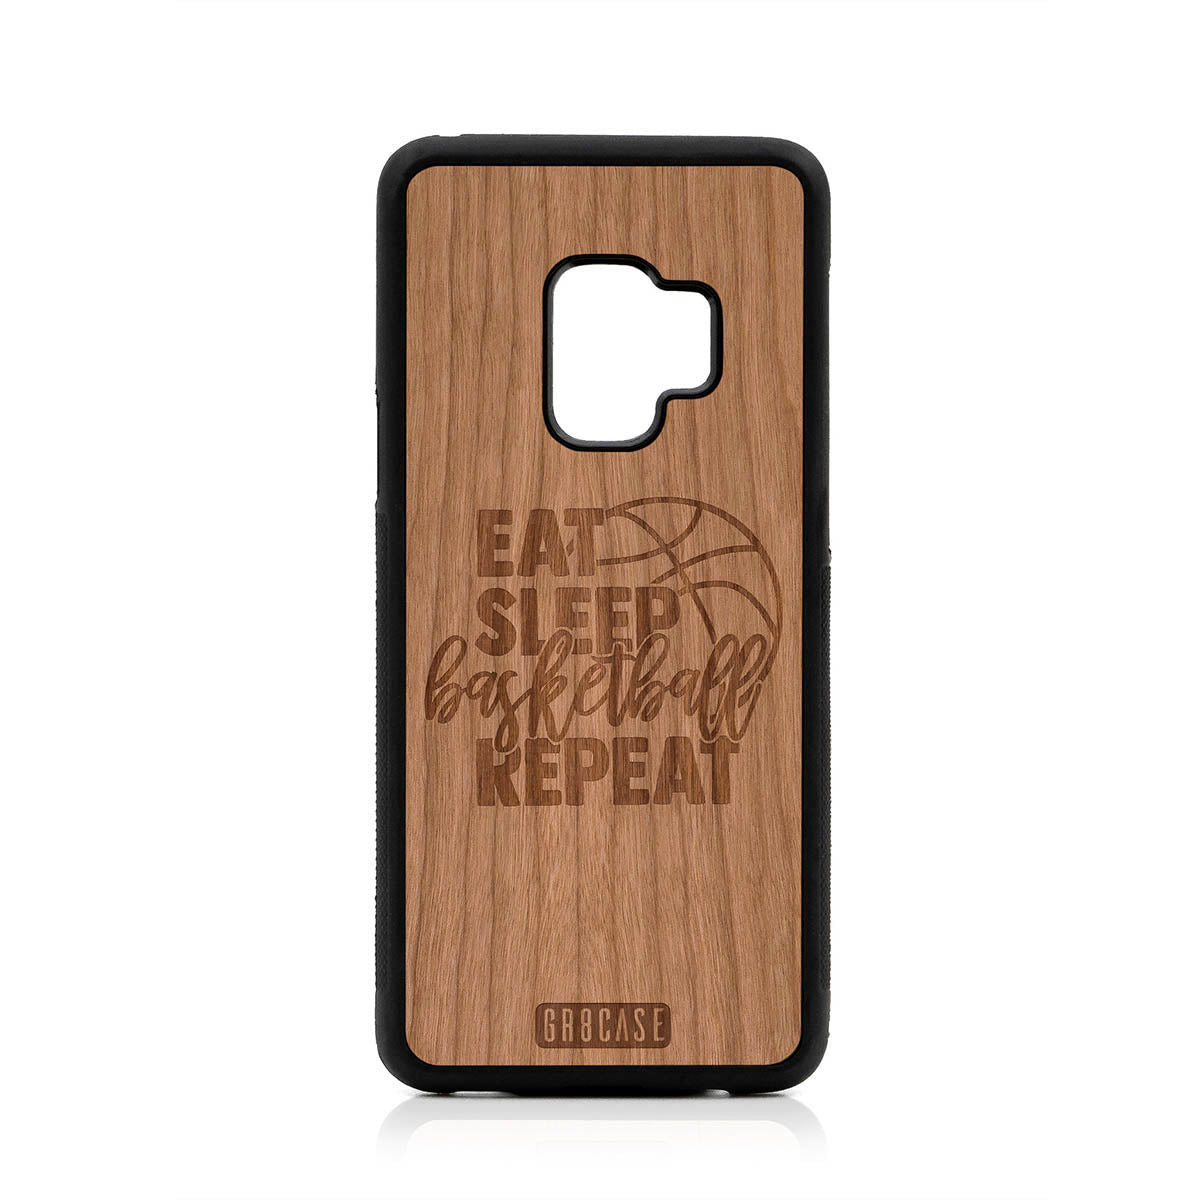 Eat Sleep Basketball Repeat Design Wood Case For Samsung Galaxy S9